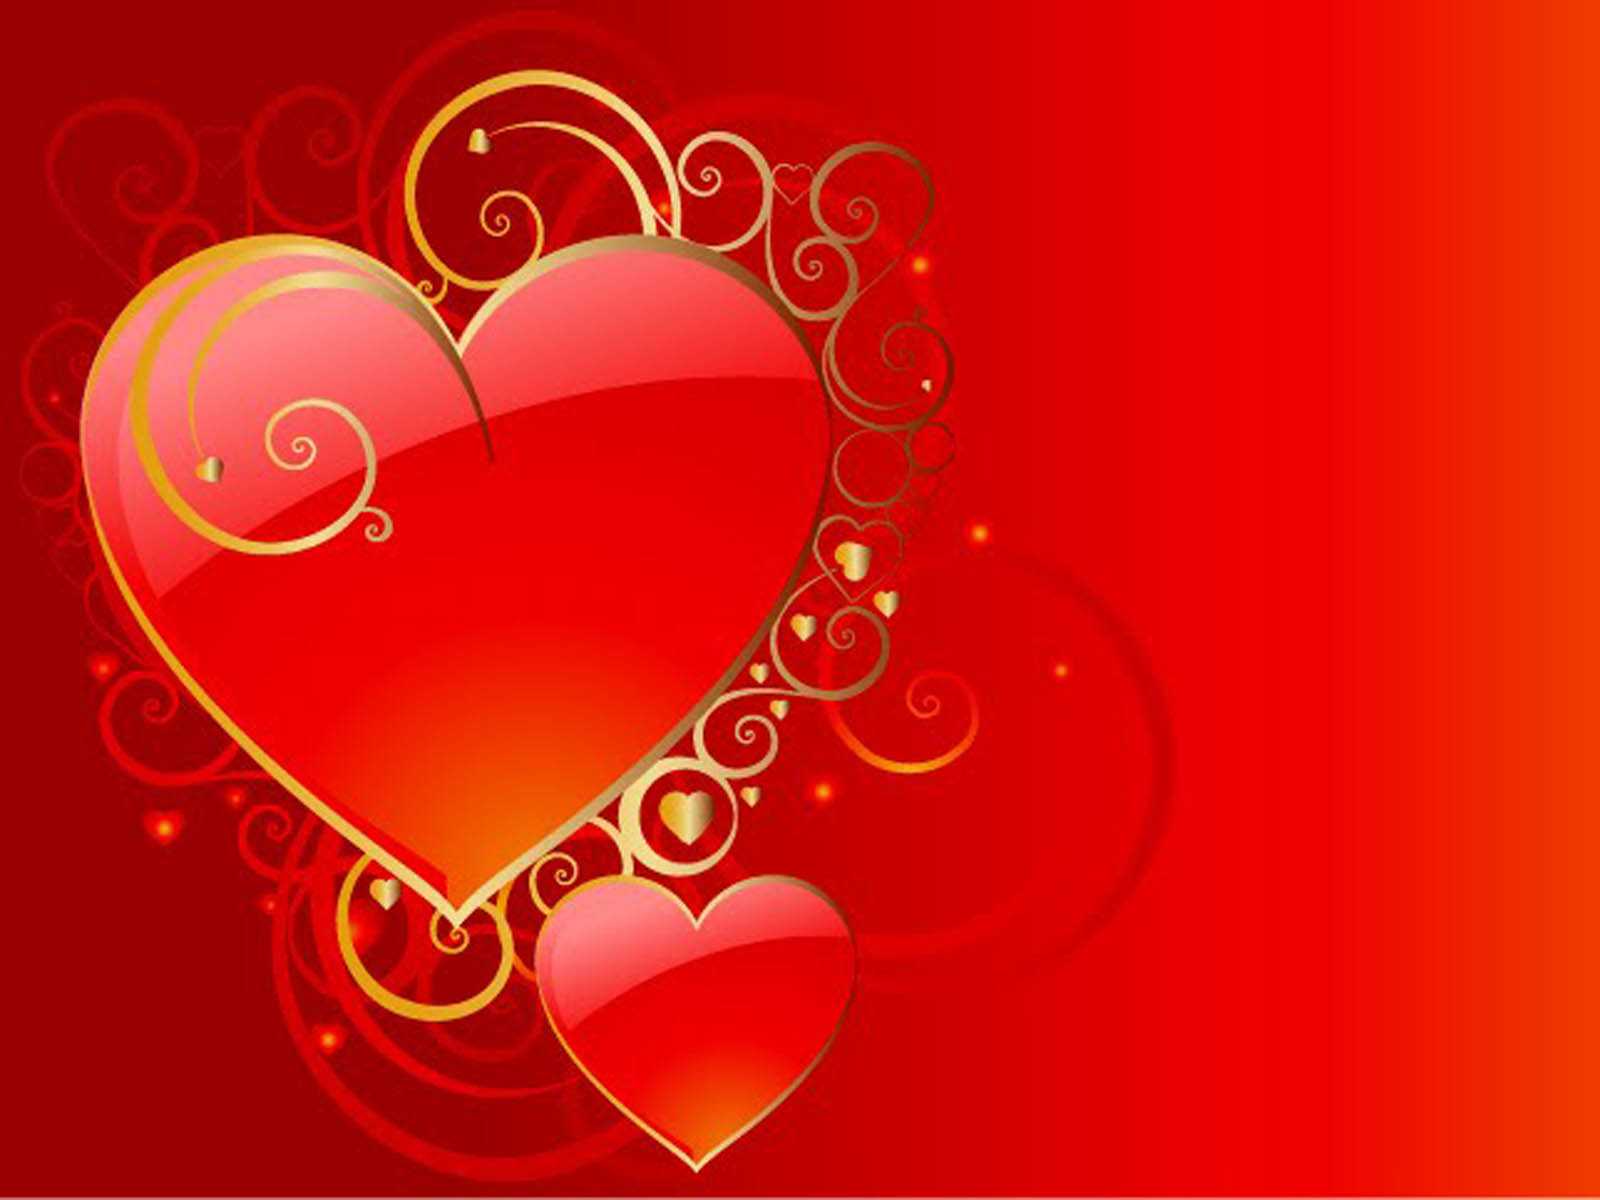 The Love Heart Wallpaper Desktop